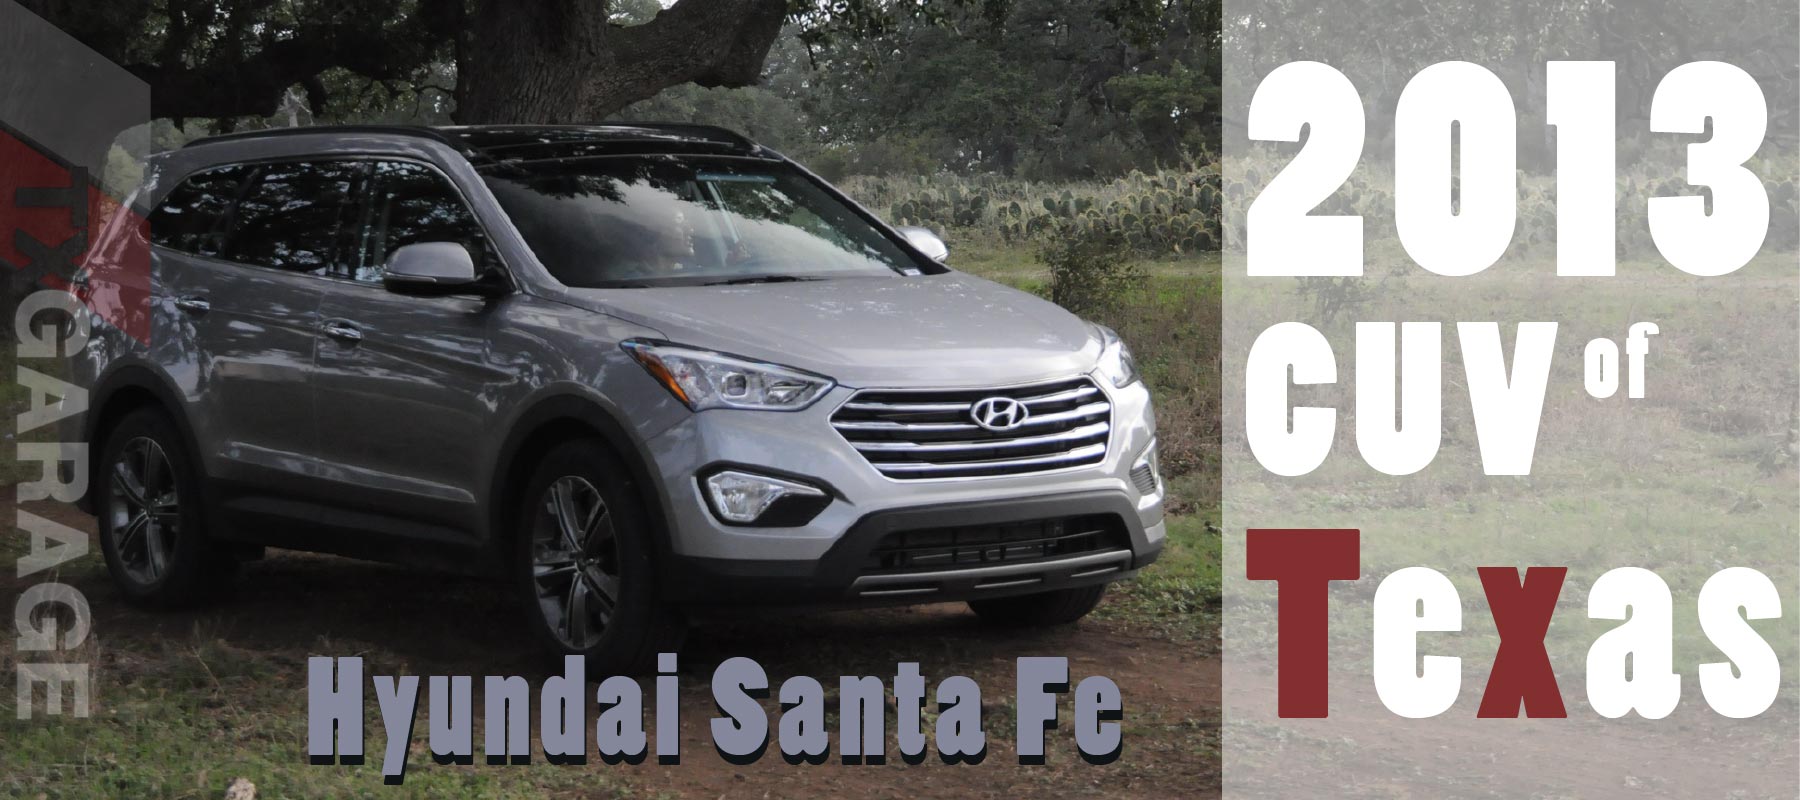 2013 CUV of Texas the 2013 Hyundai Santa Fe